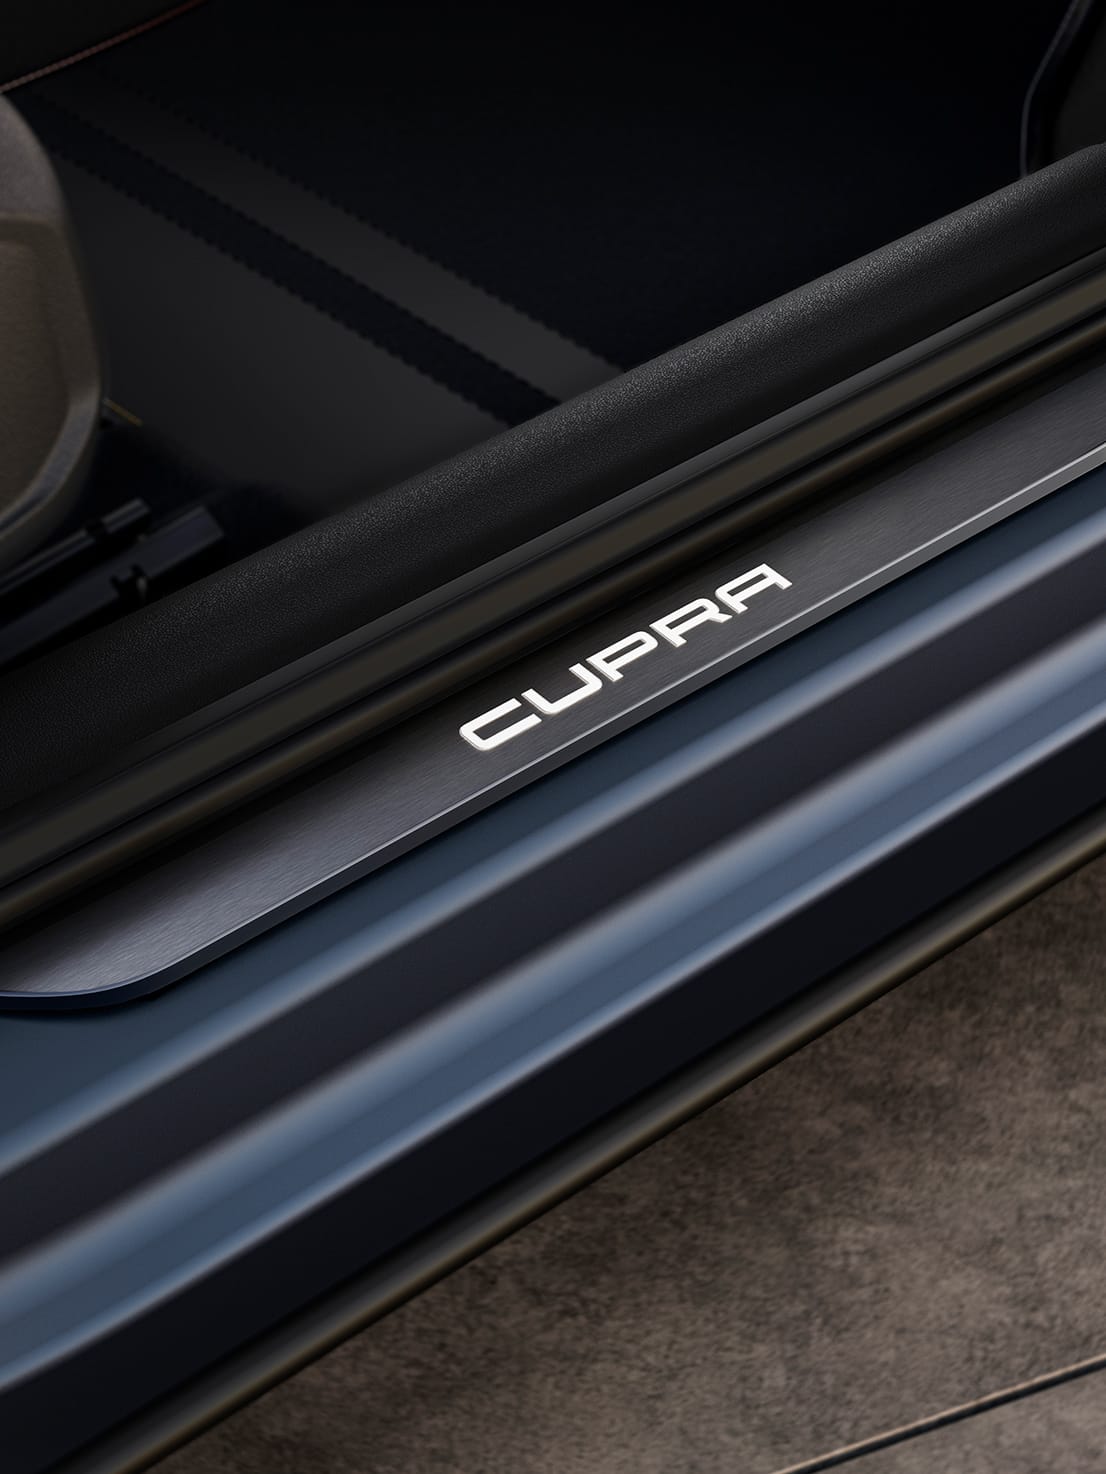 new cupra formentor compact suv with illuminated cupra detailing on door sills